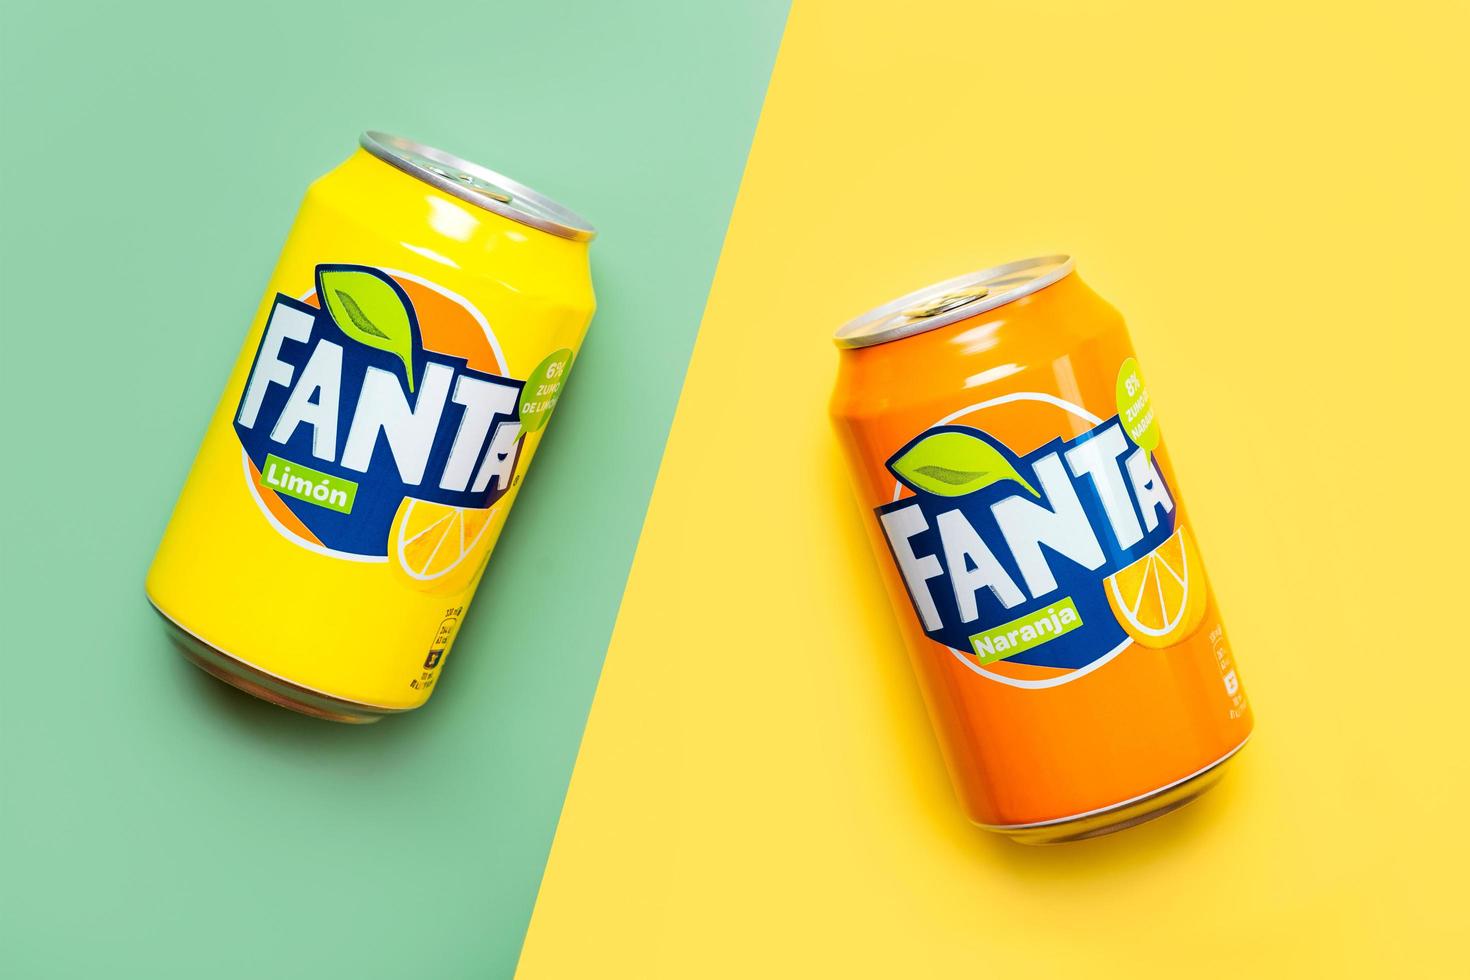 Cans of Fanta Orange and Fanta Lemon photo